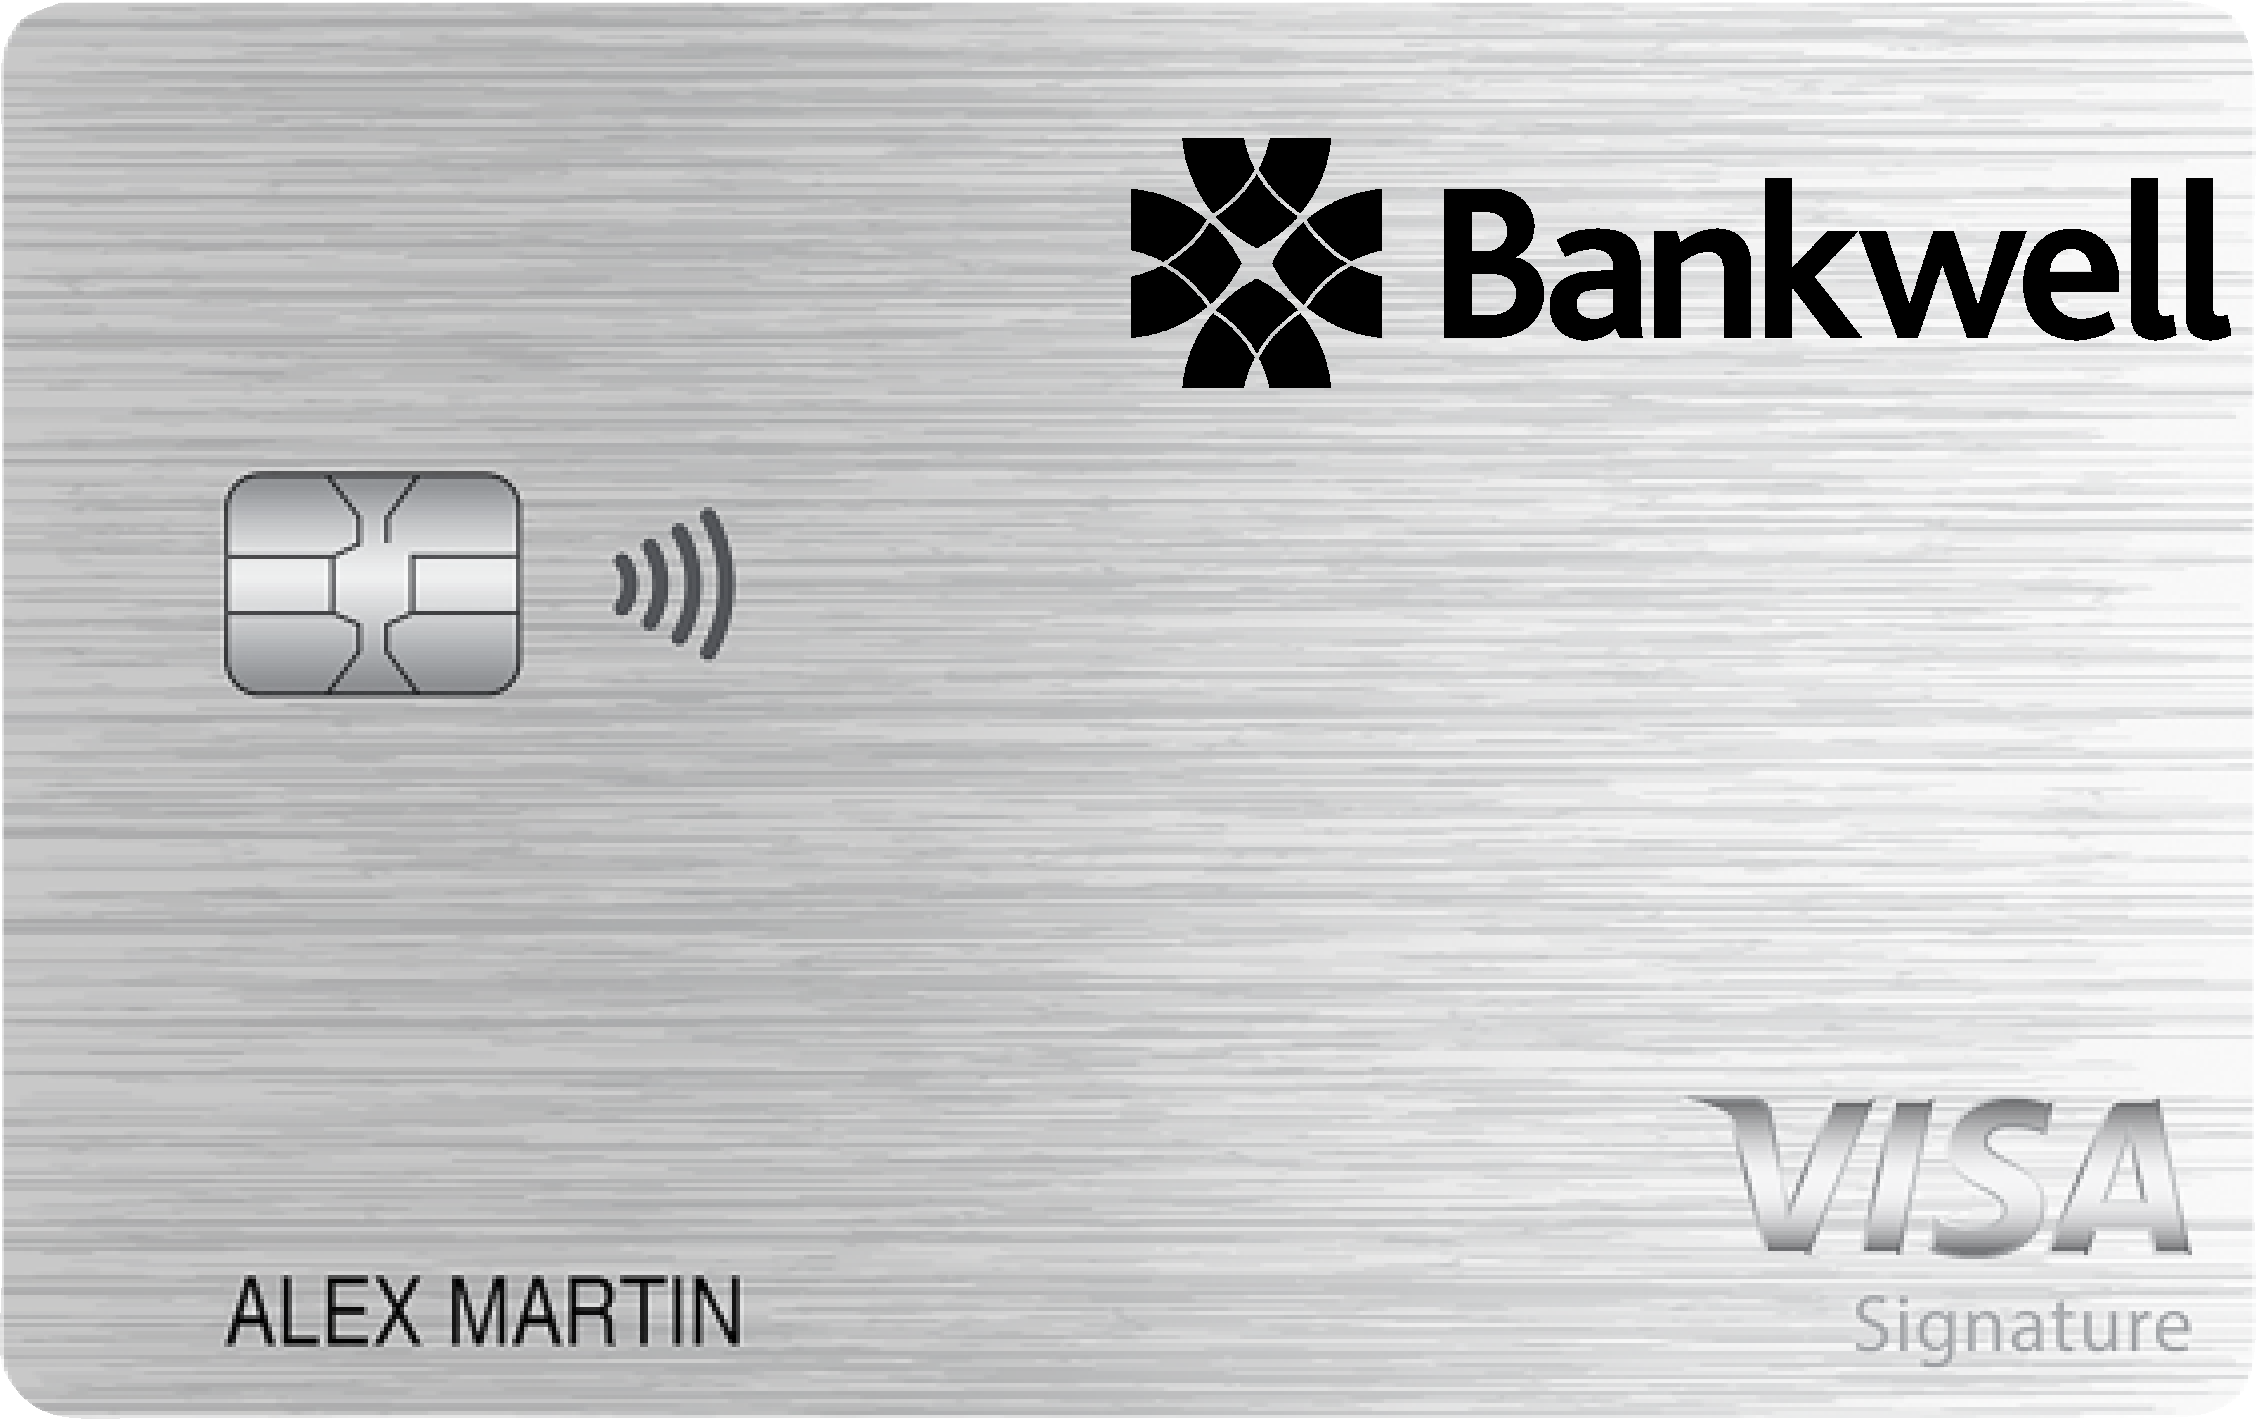 Bankwell Bank Max Cash Preferred Card